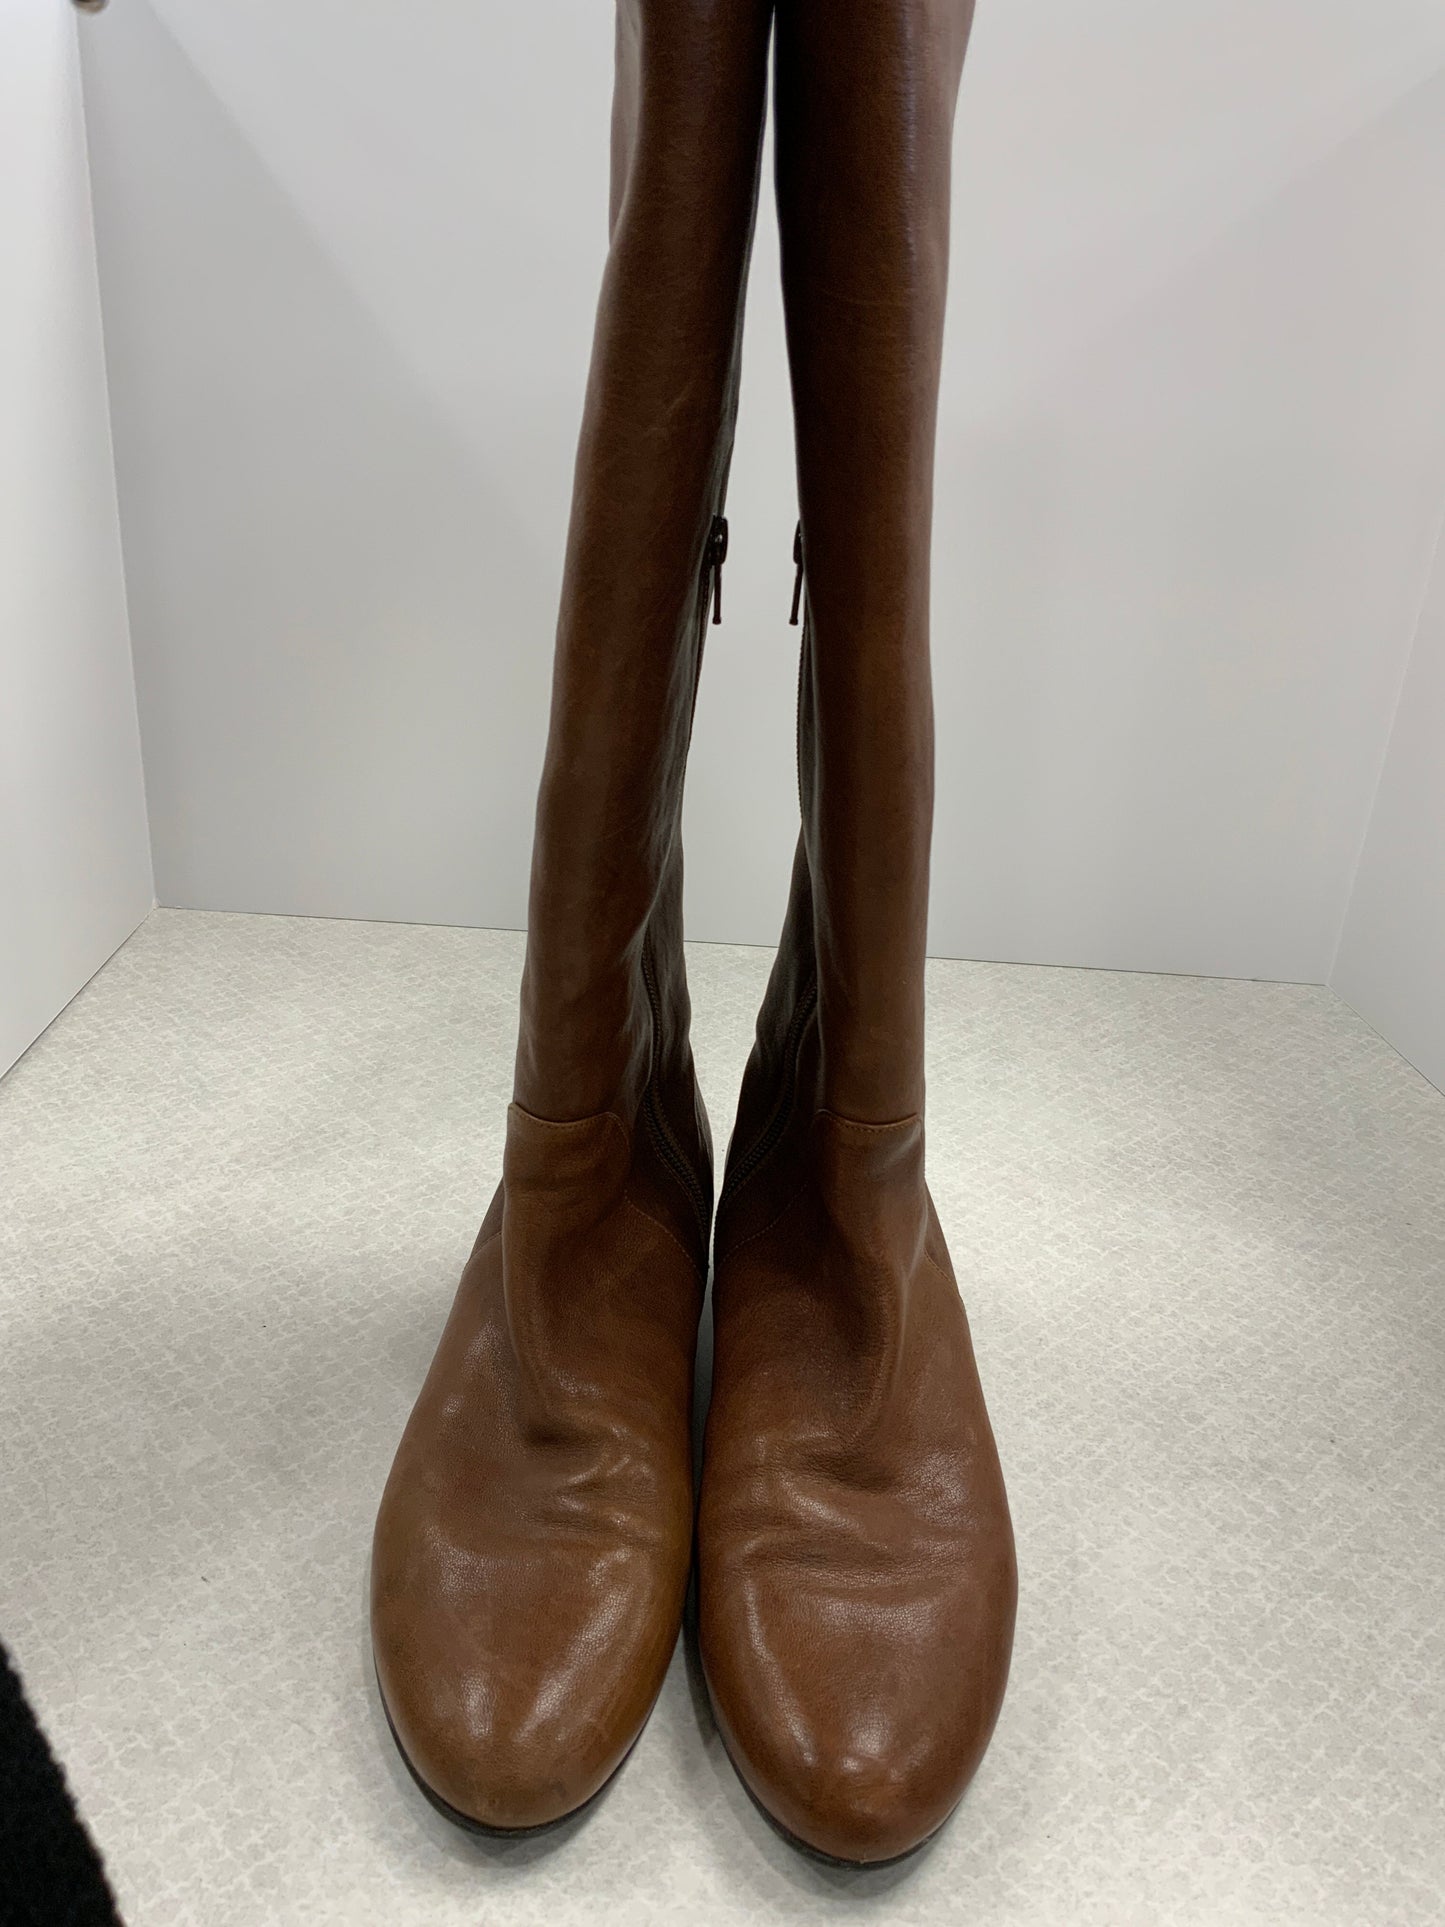 Boots Knee Flats By Stuart Weitzman  Size: 8